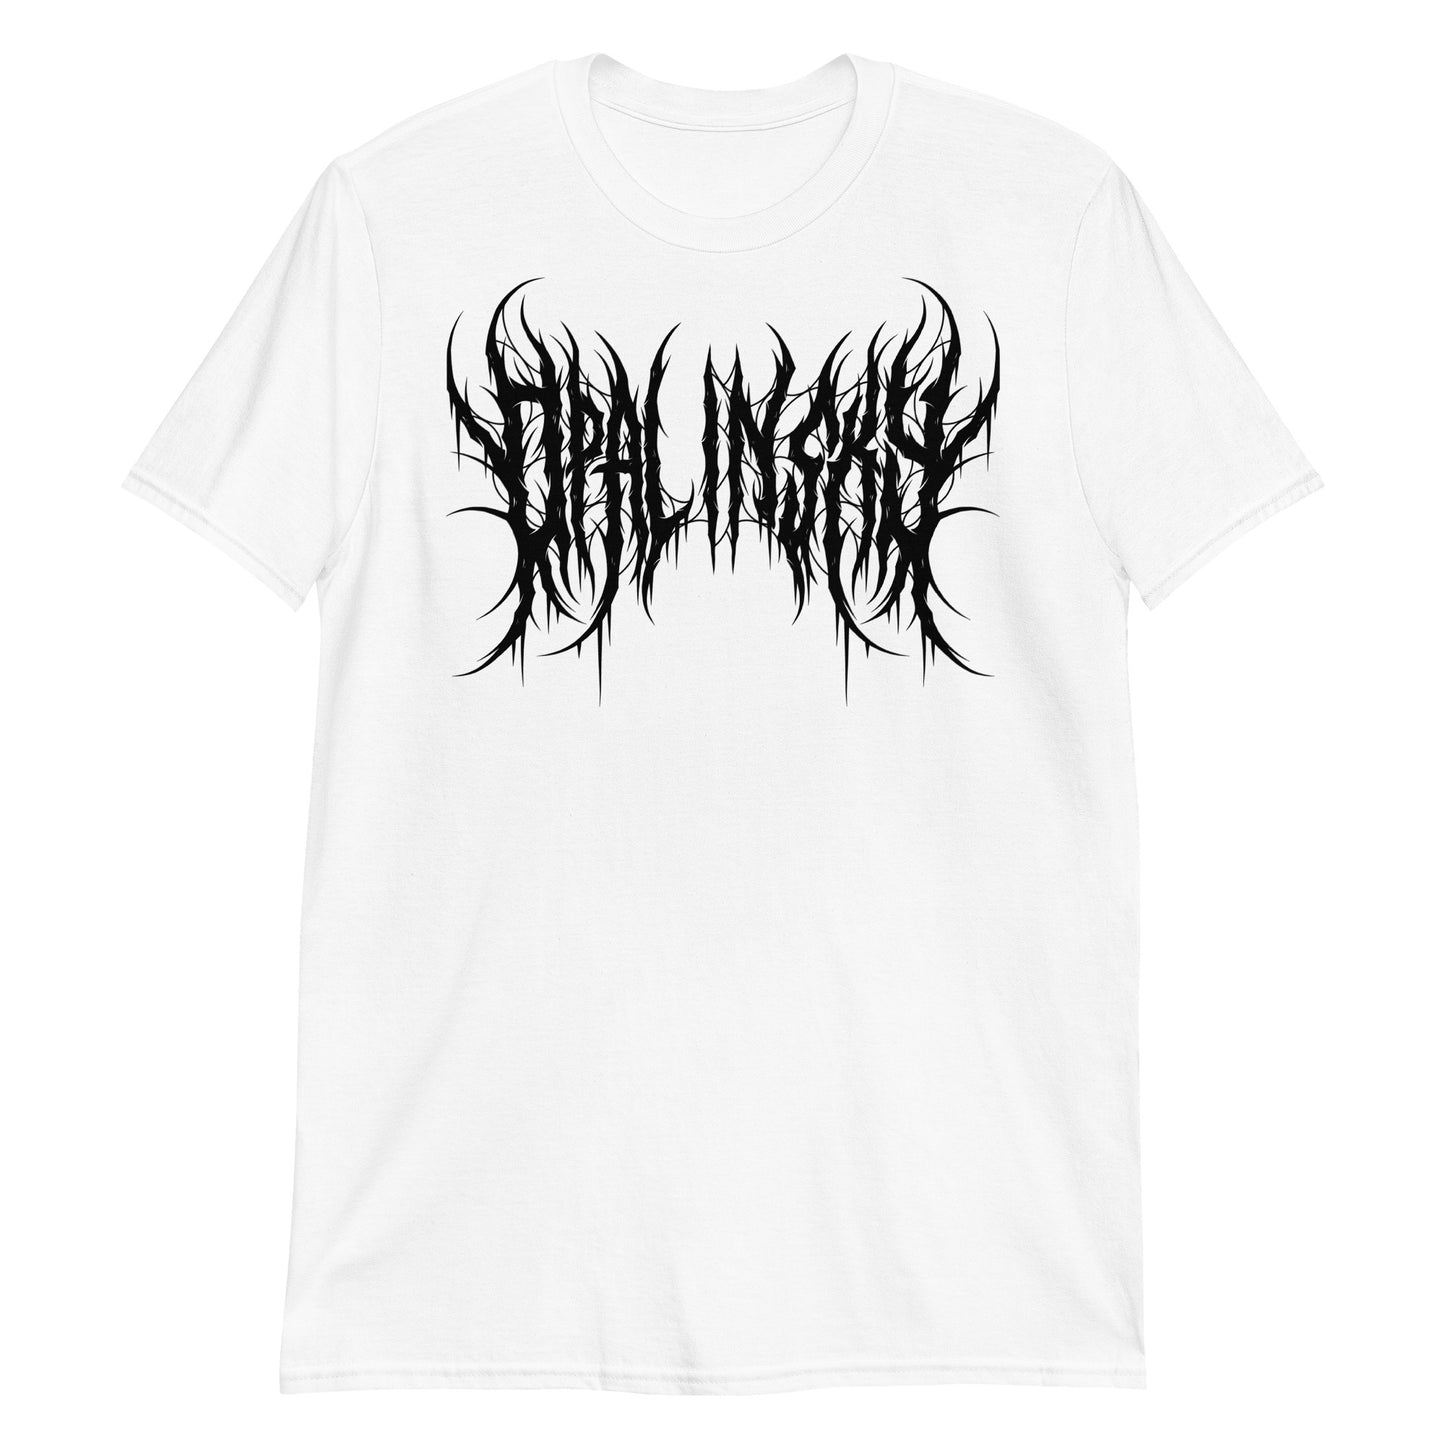 OPAL IN SKY "White Death Metal" Unisex T-Shirt